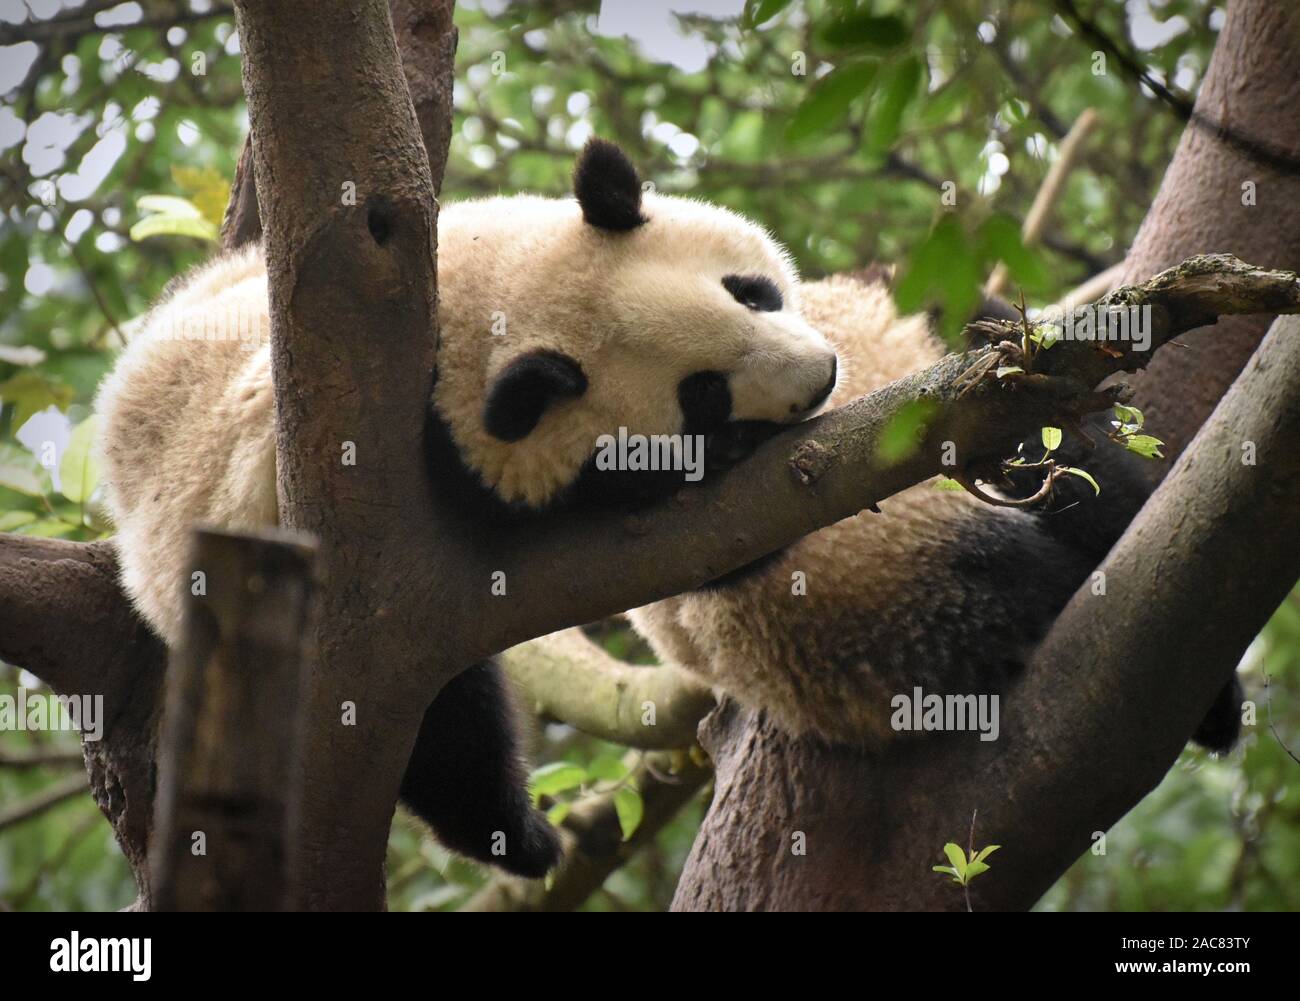 Tired panda sleeps on tree branches Stock Photo